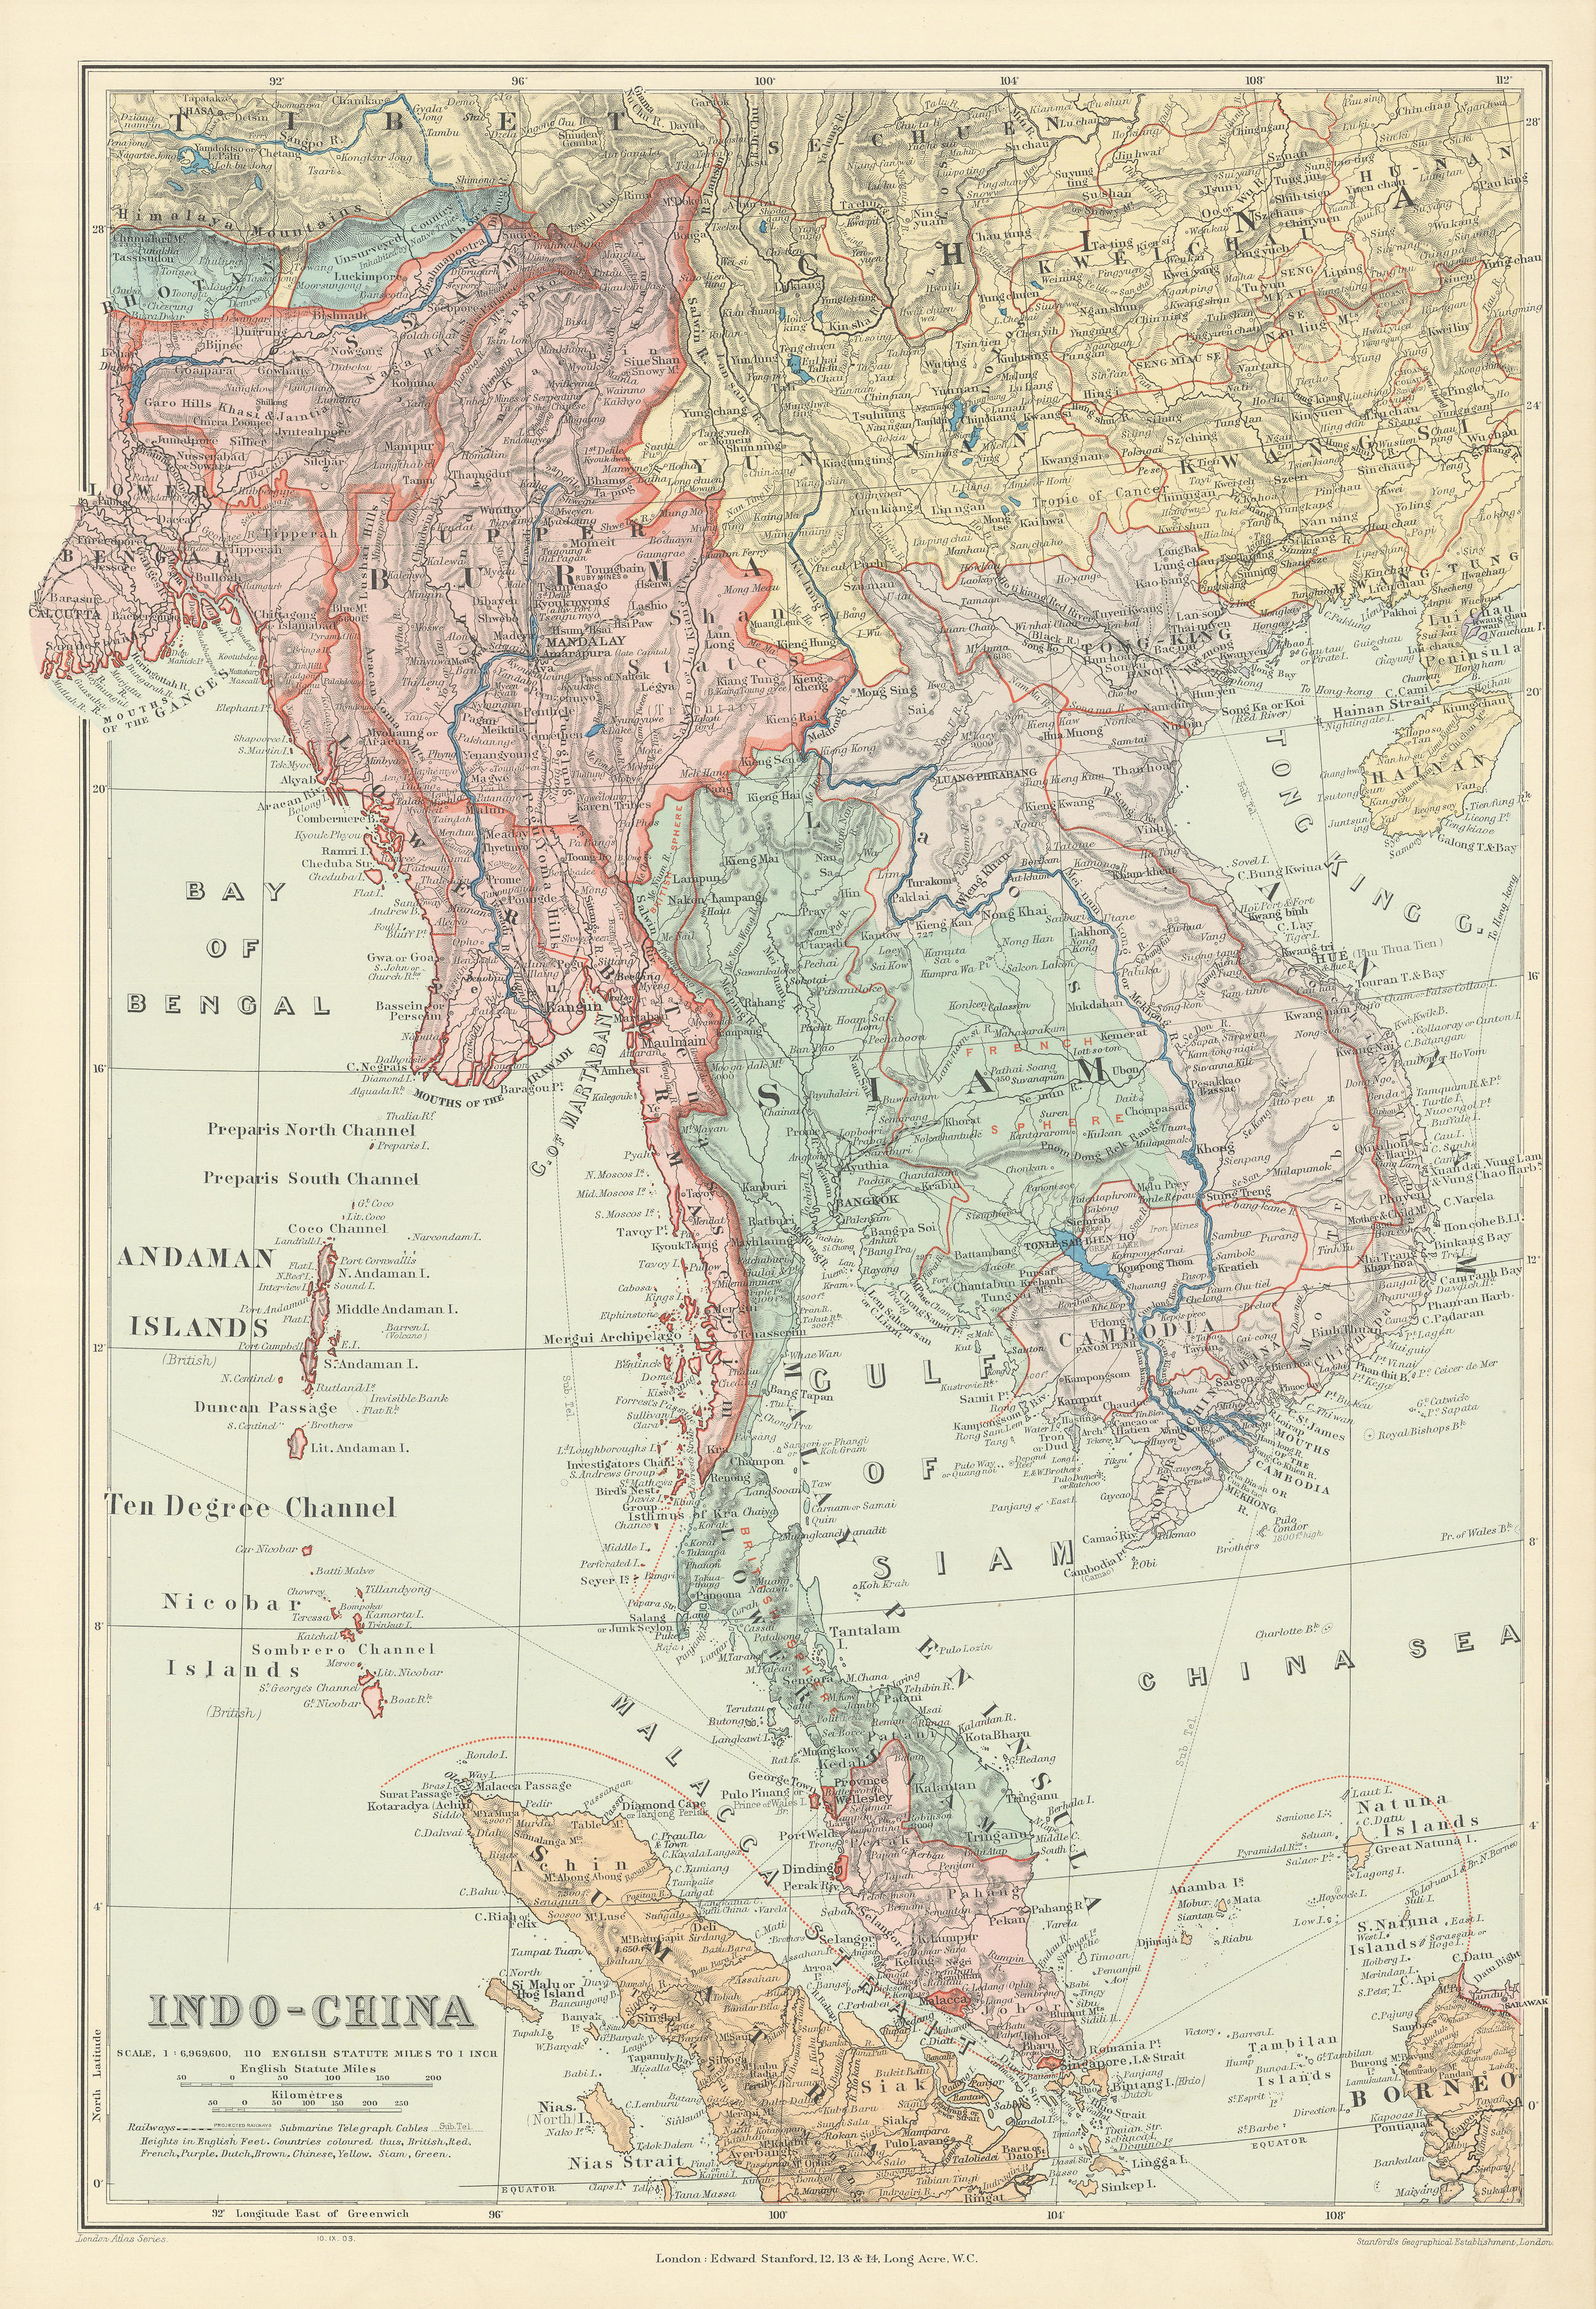 Indo-China. Indochina. Siam Annam Burma Thailand Cambodia. STANFORD 1904 map